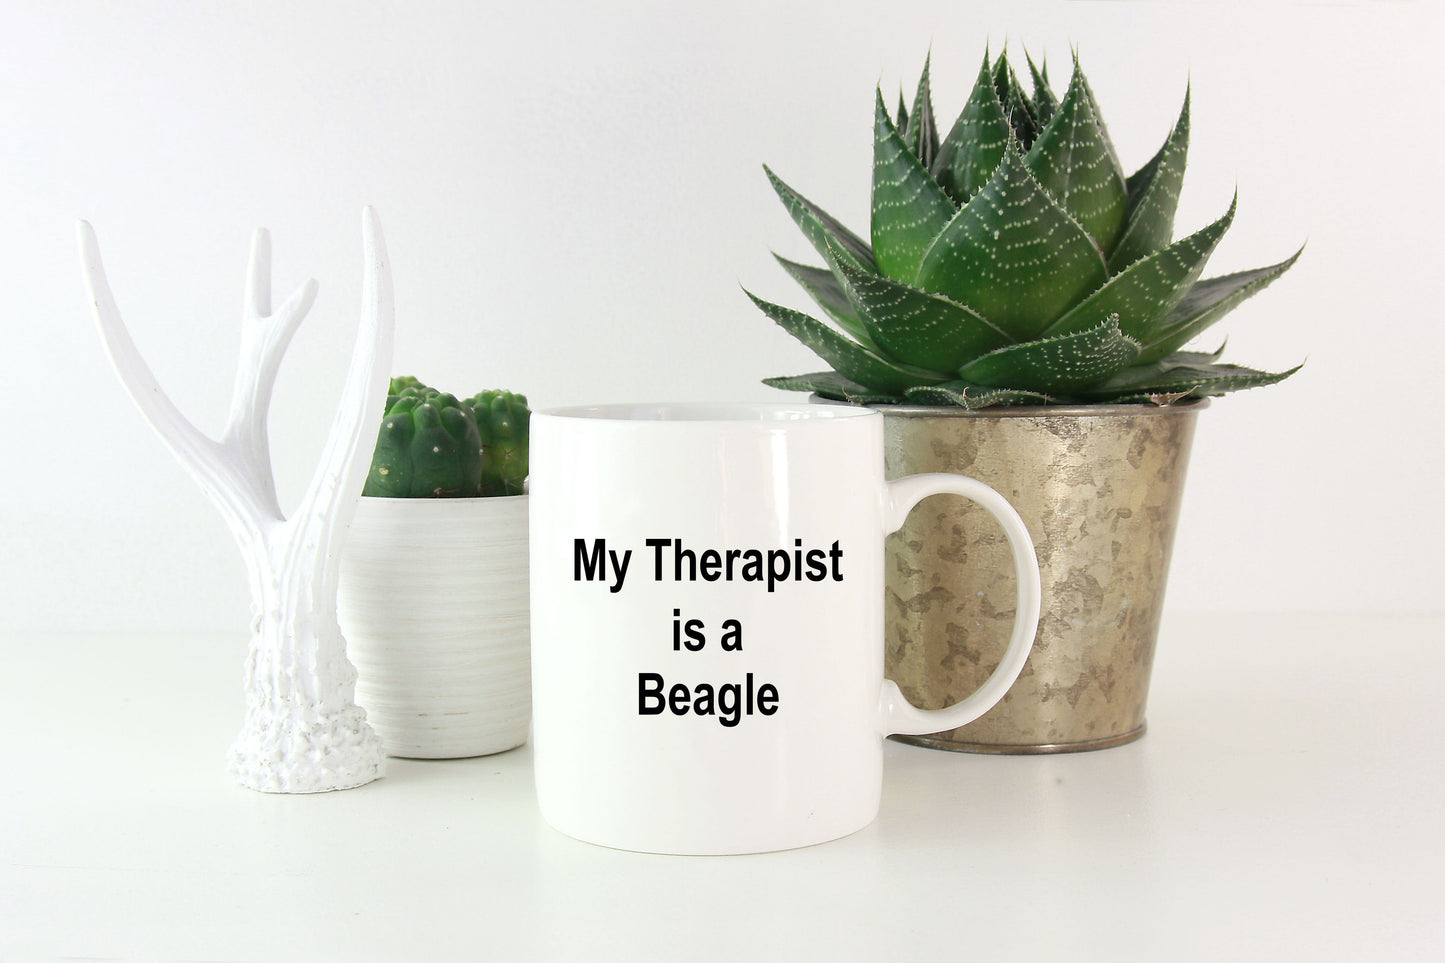 Beagle Dog Lover Gift Therapist White Ceramic Coffee Mug